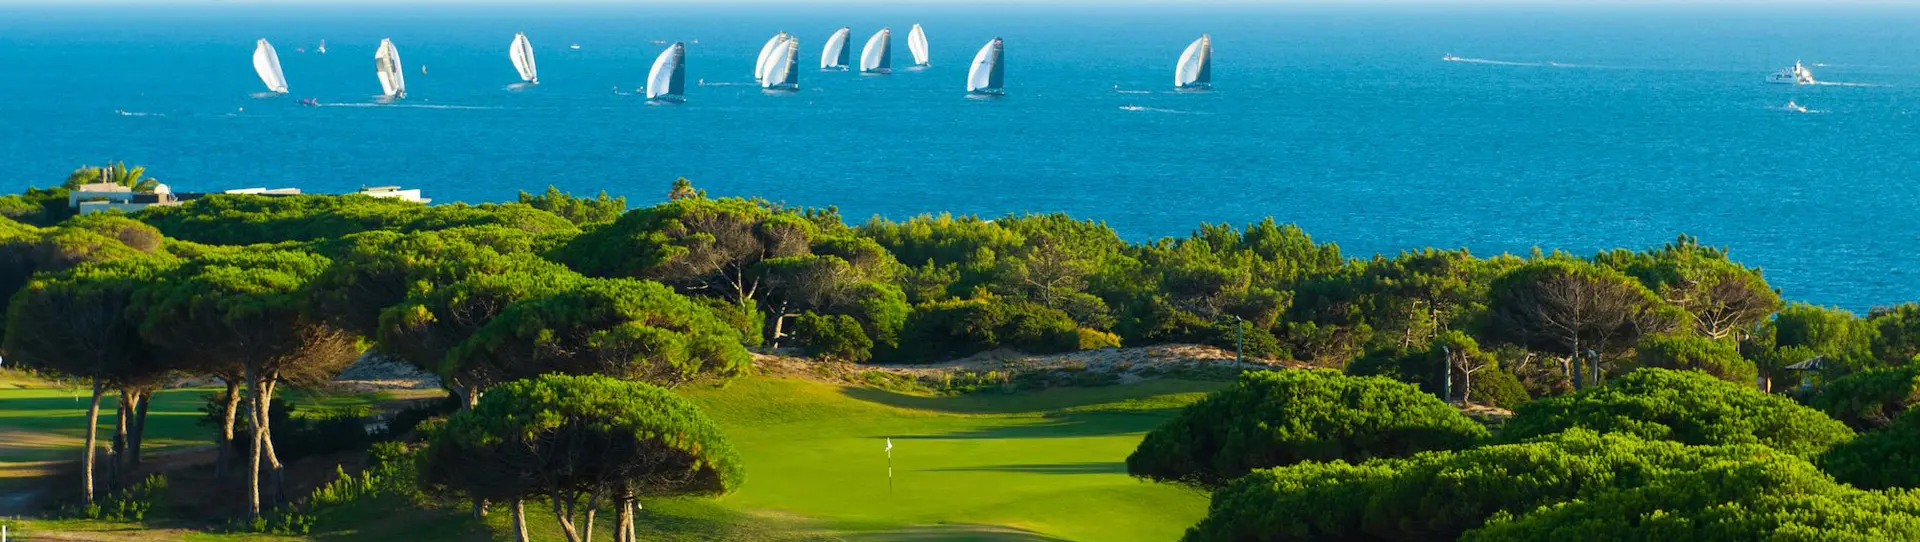 Portugal golf courses - Oitavos Dunes - Photo 1